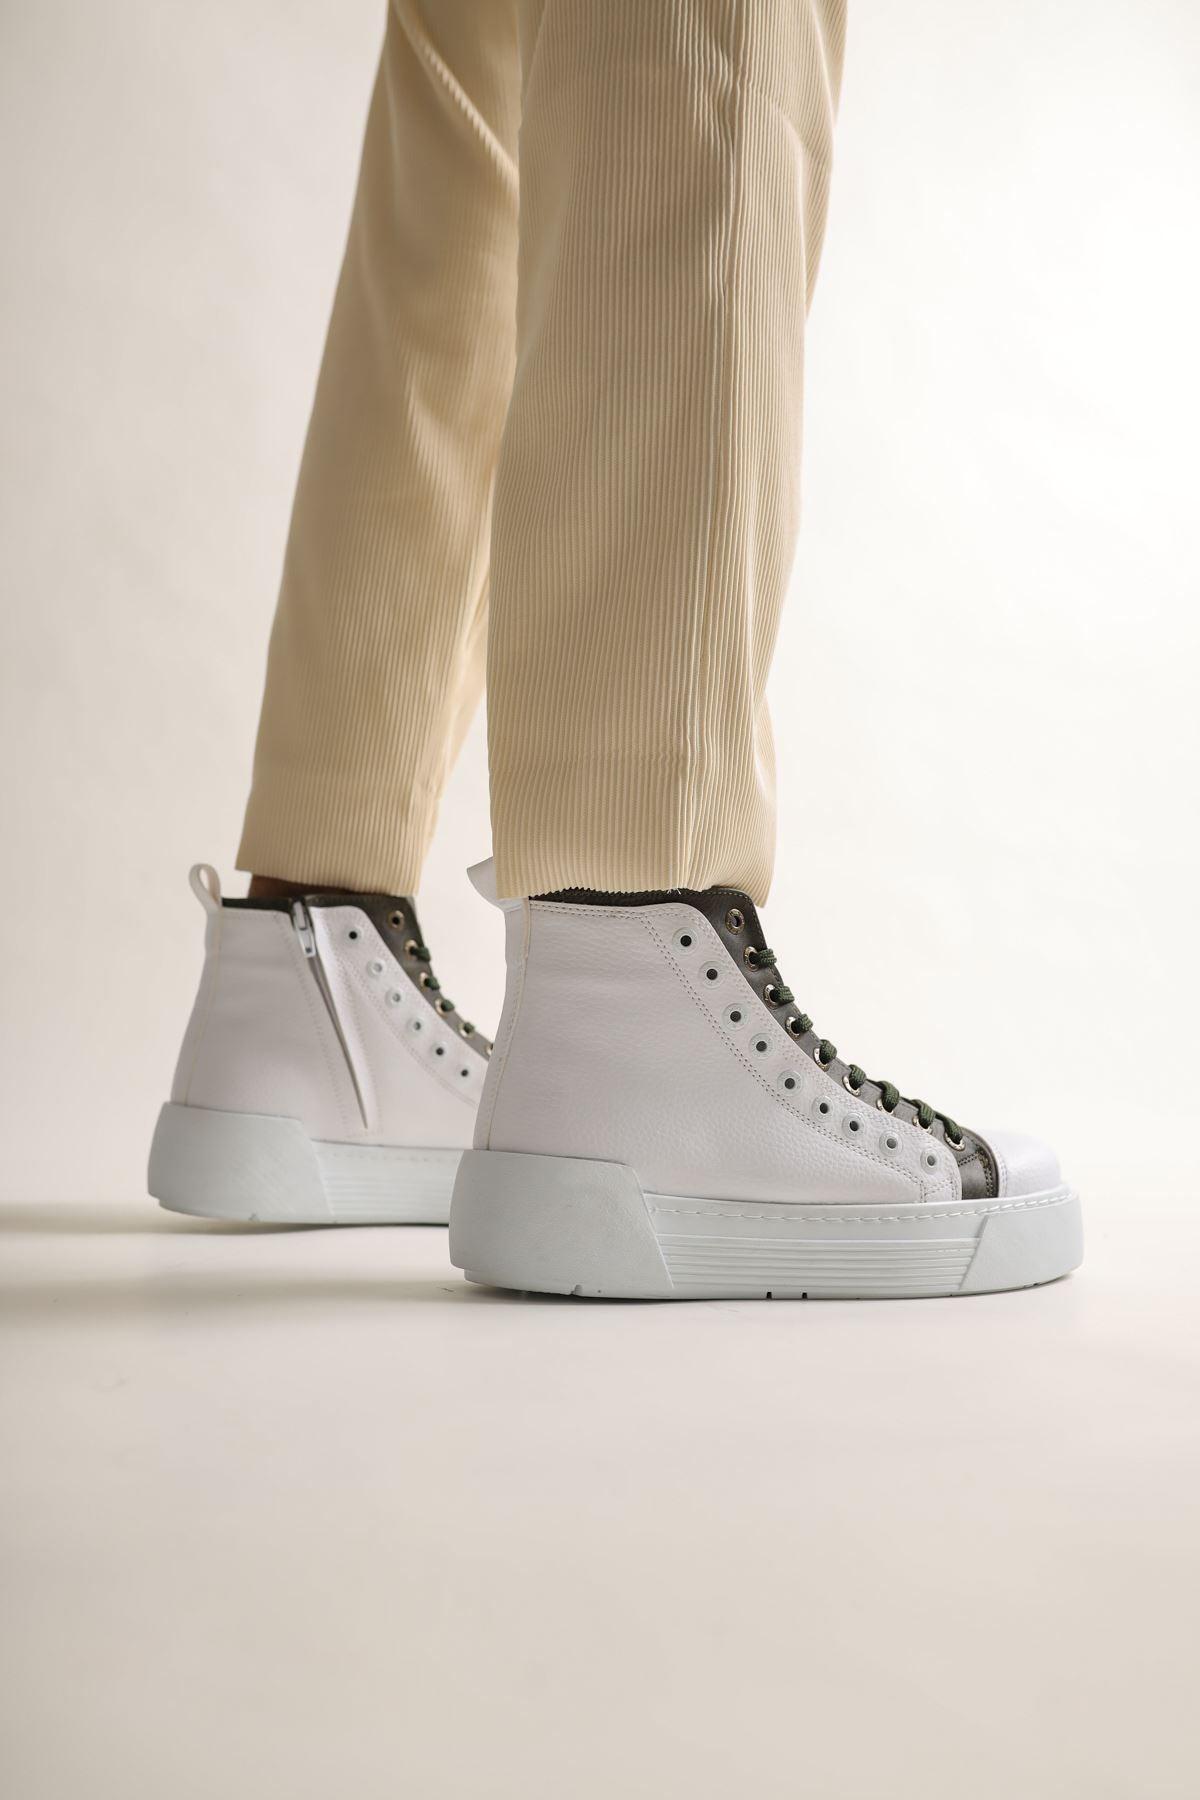 CH167 BT Men's Boots WHITE / KHAKI - STREET MODE ™